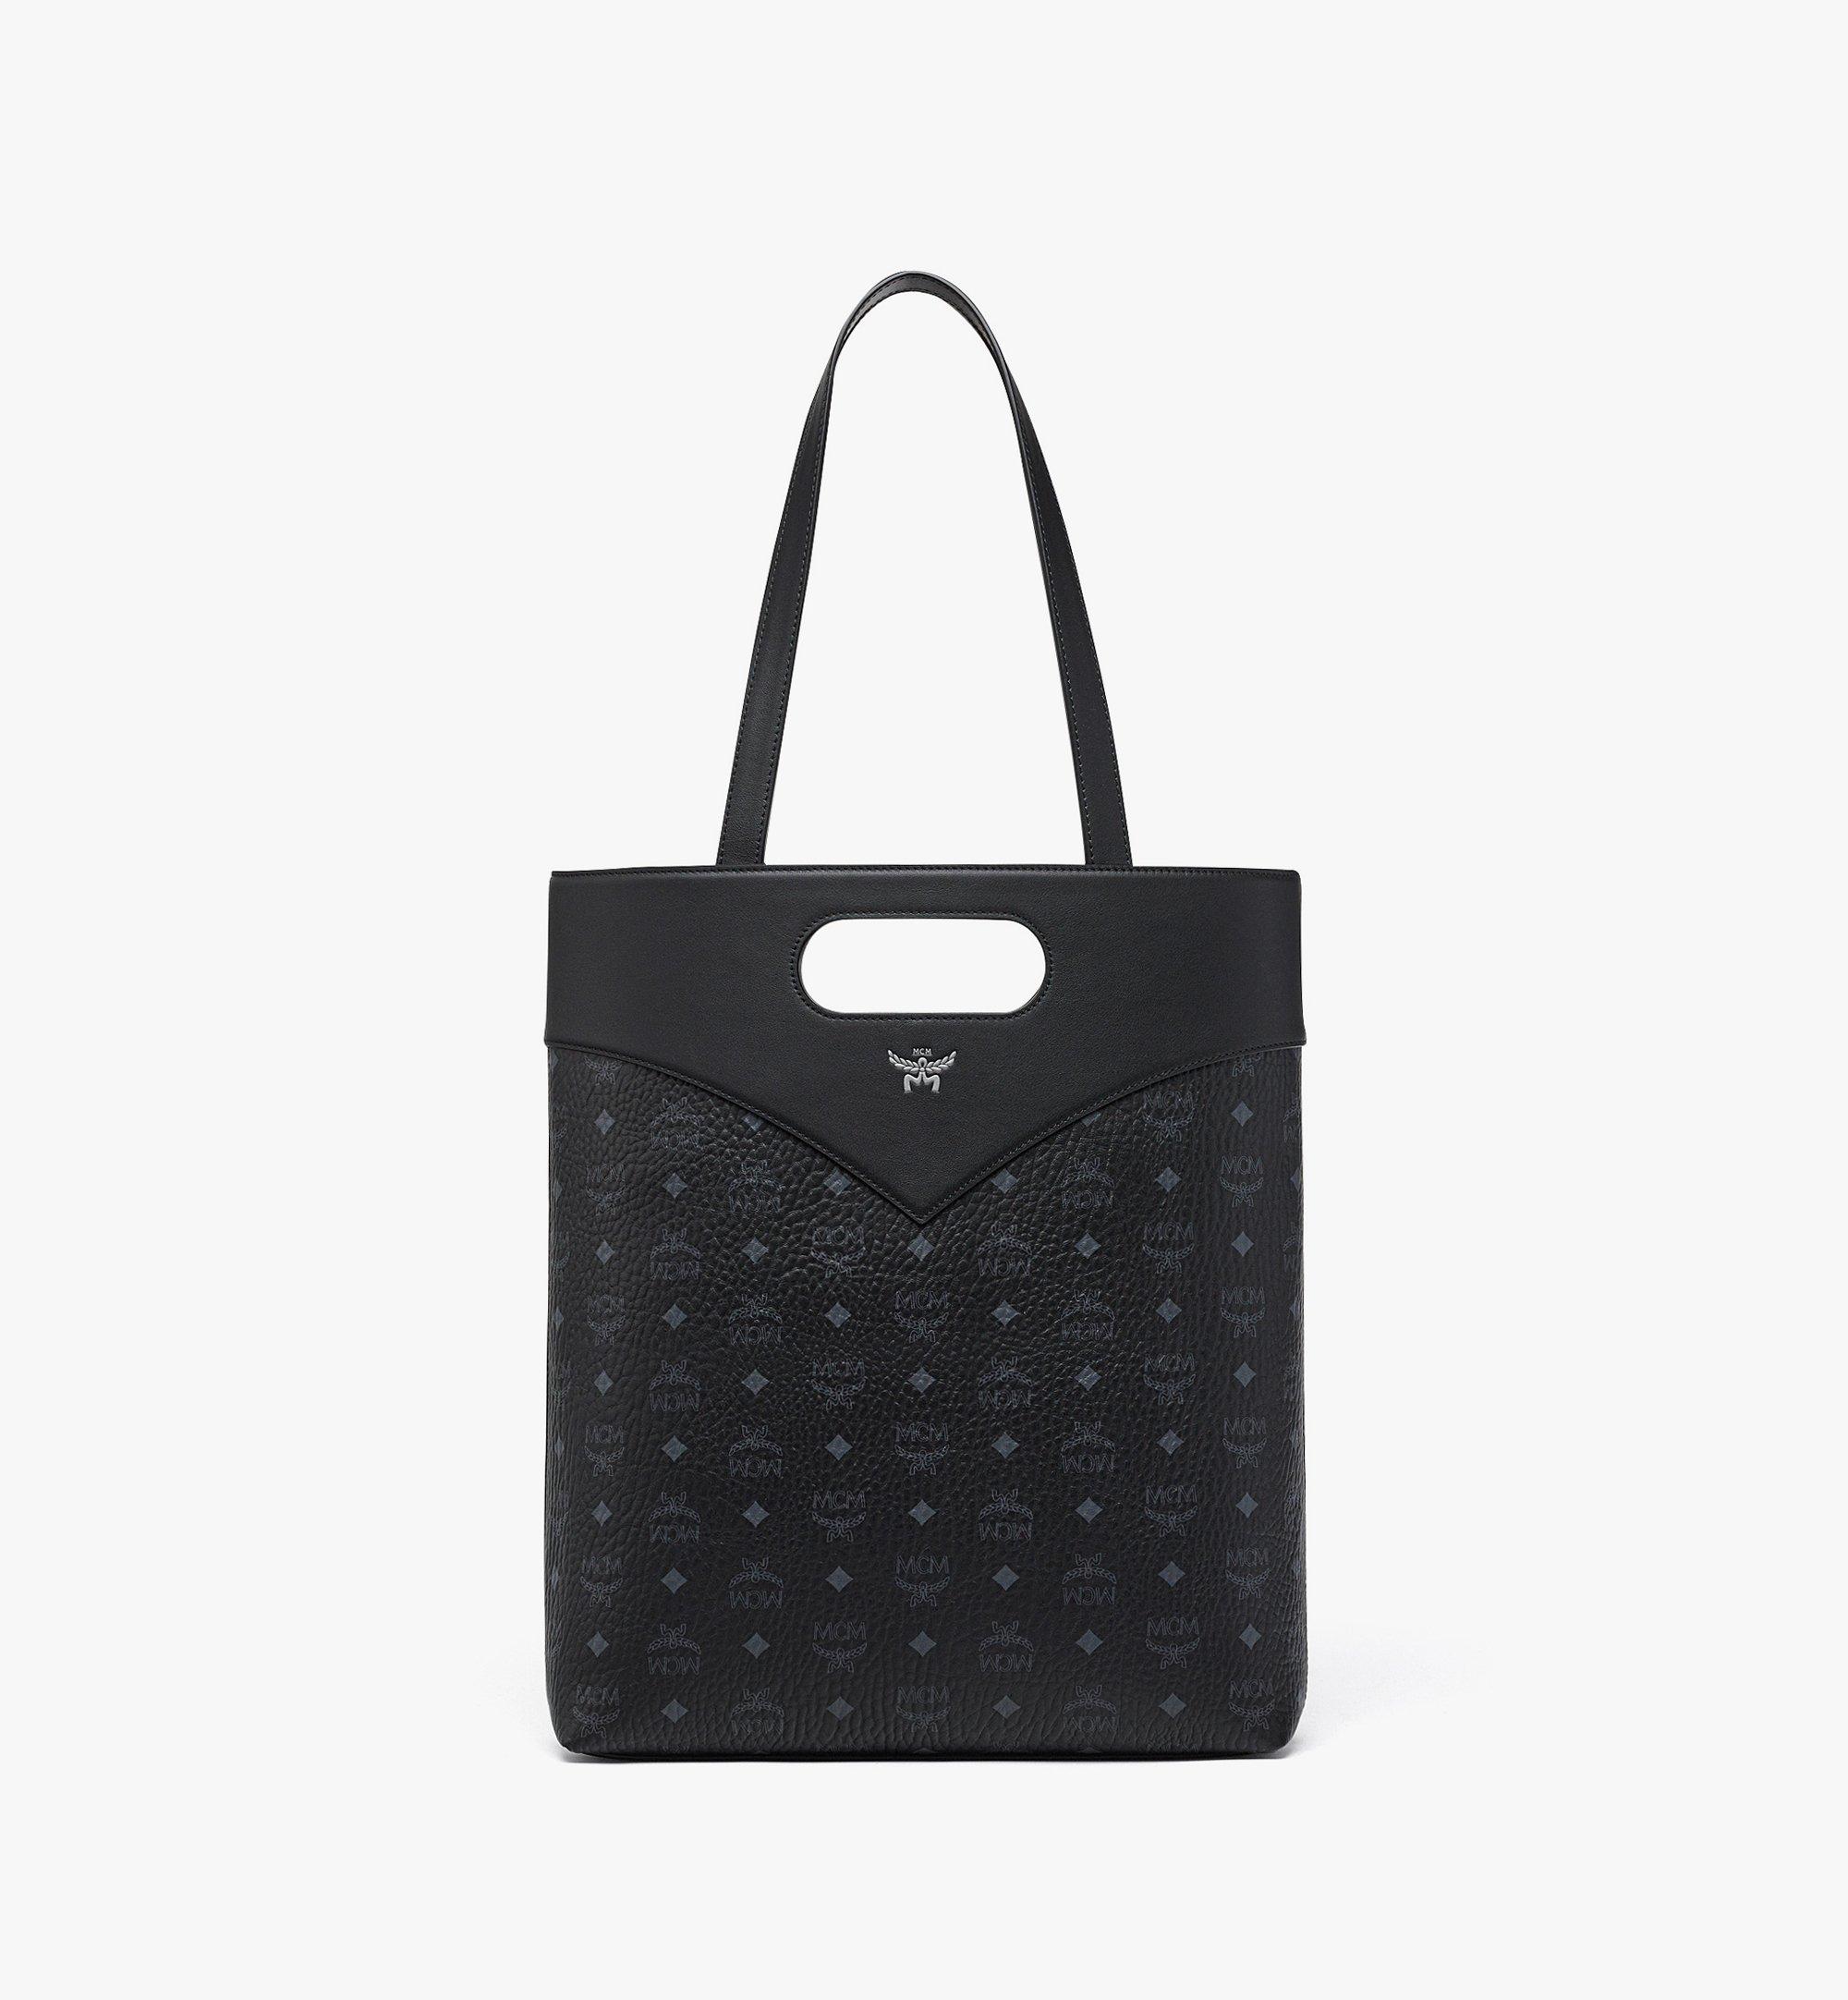 MCM Women's Bags | Luxury Leather Designer Handbags For Women 